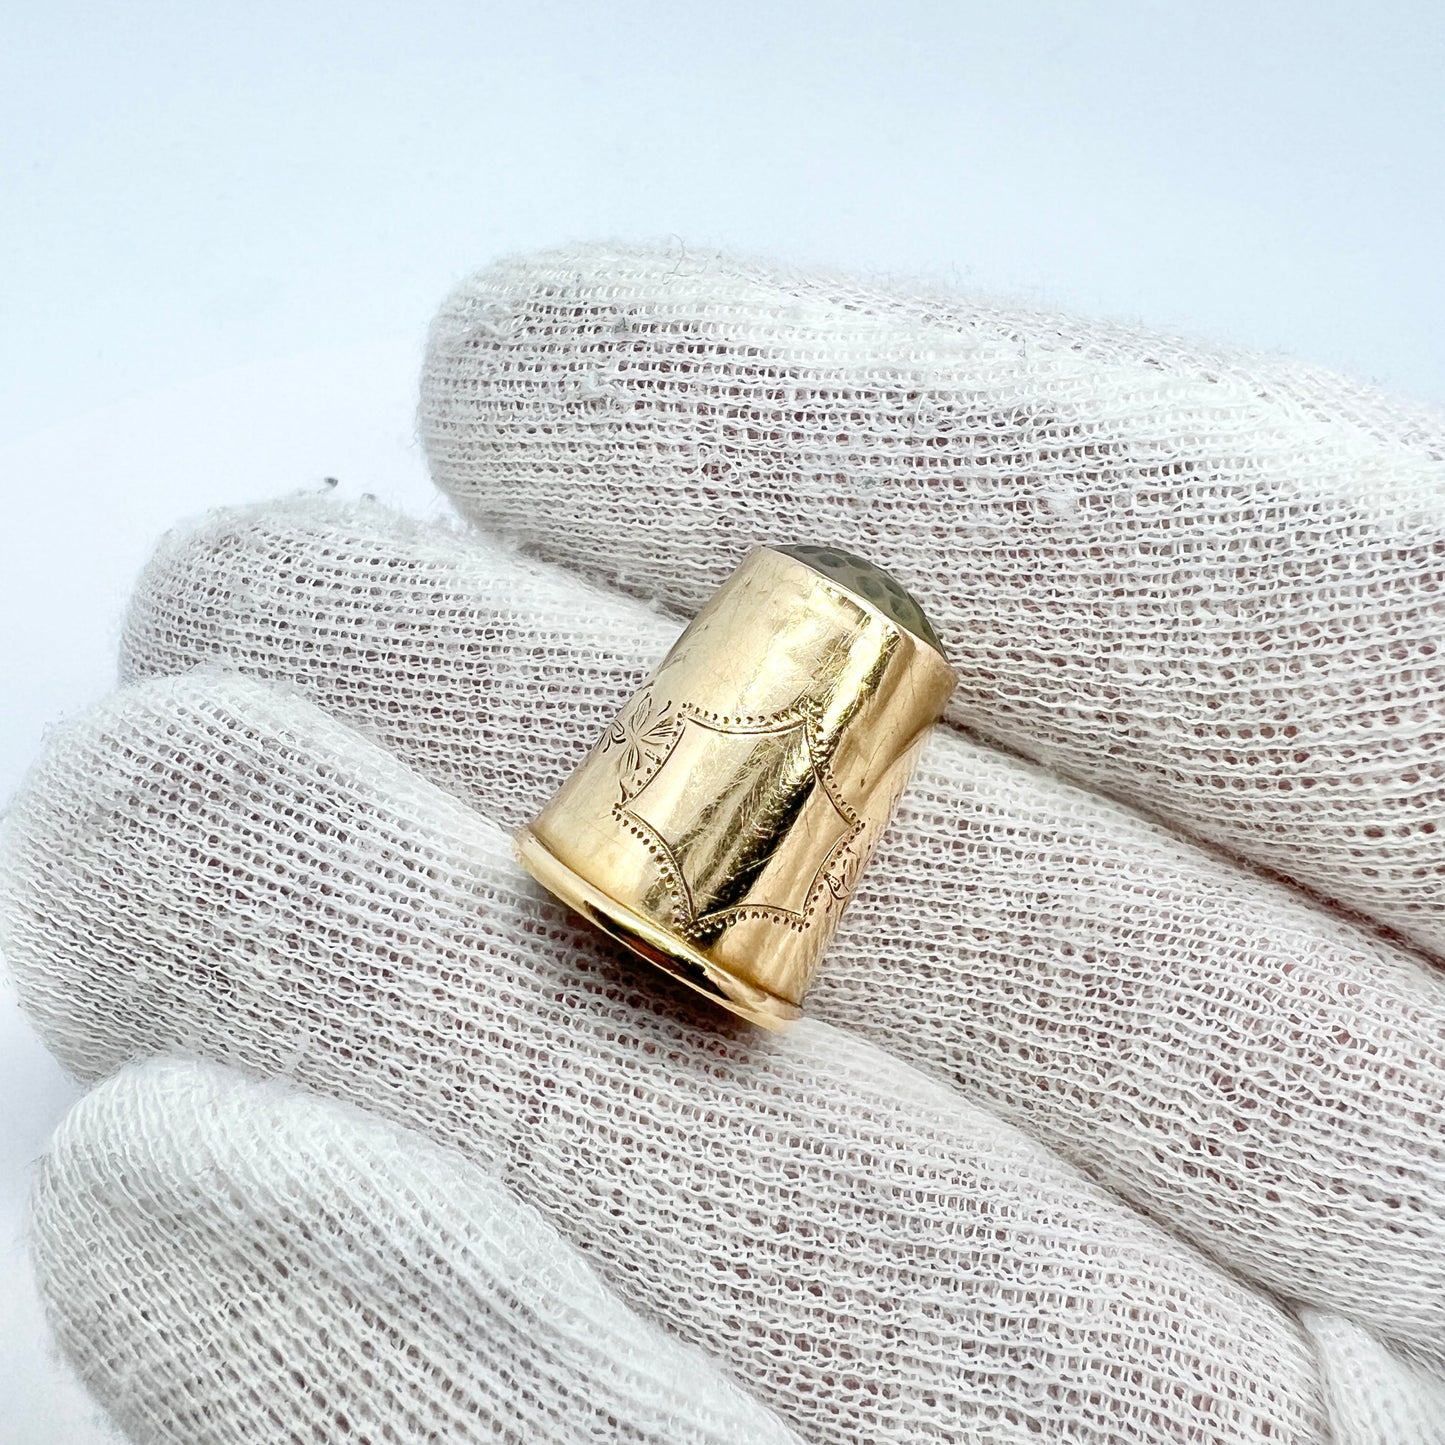 G Dahlgren, Sweden 1901 Antique 18K Gold Thimble